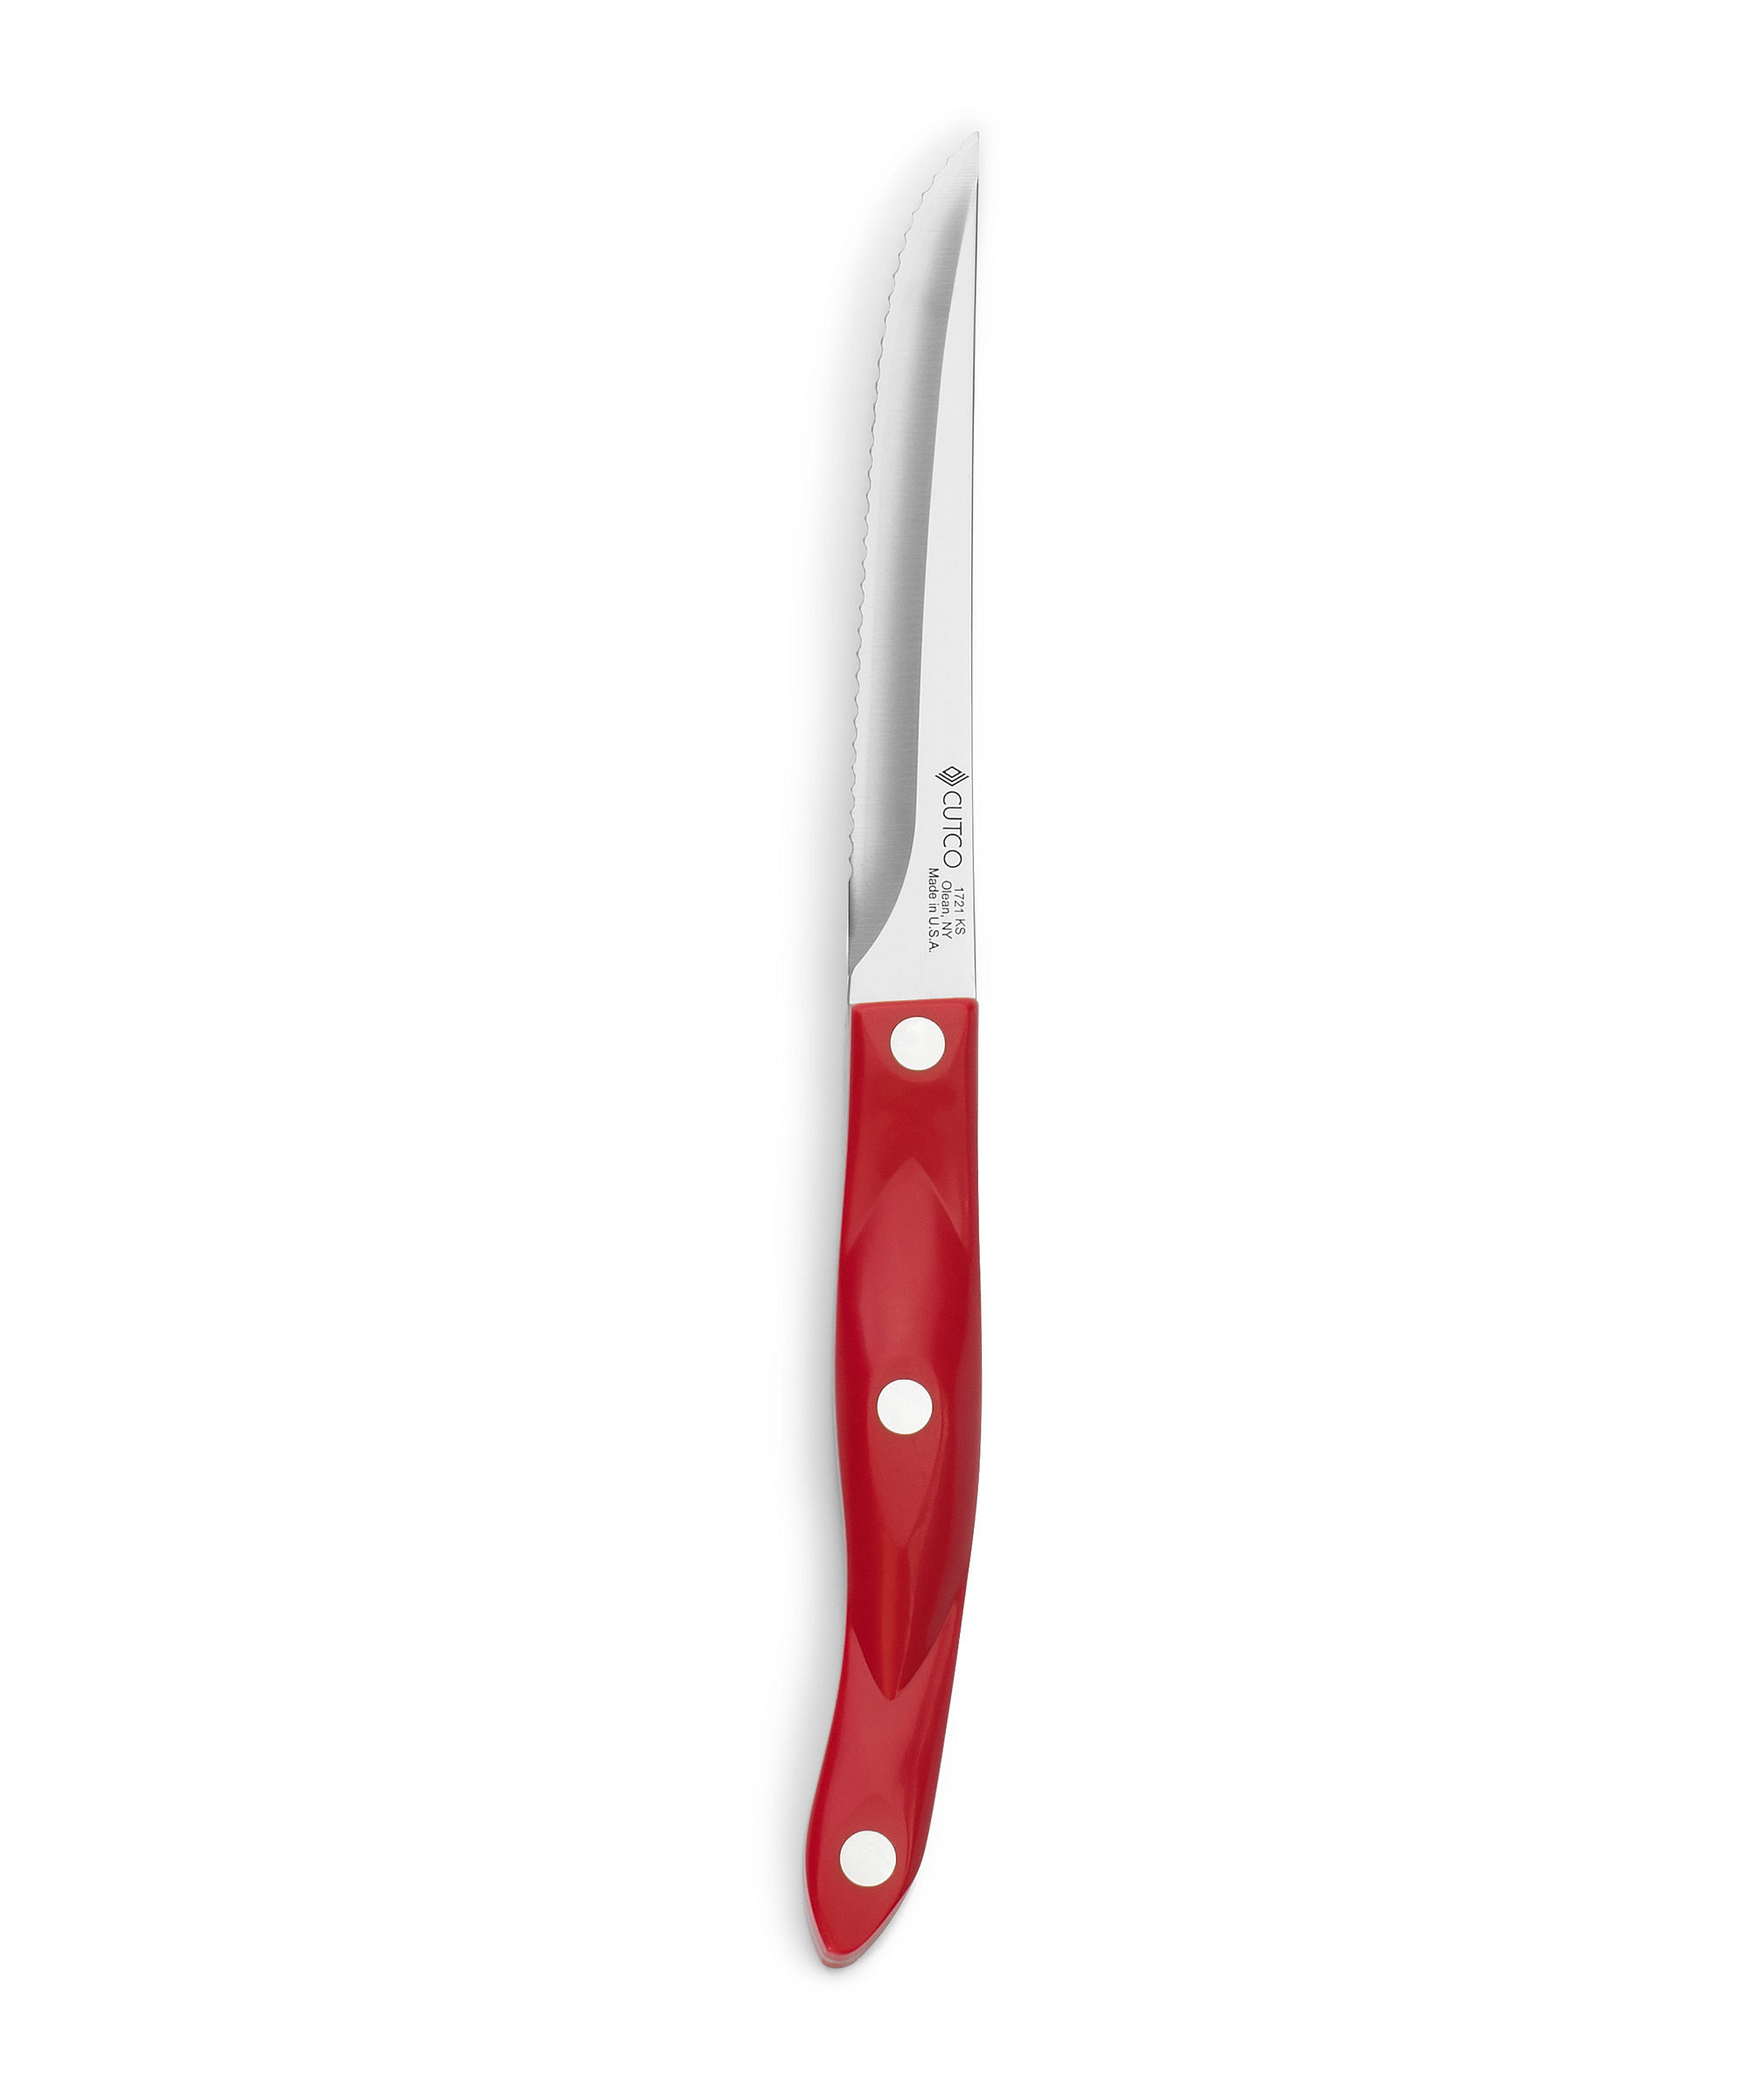 Cutco 1722 14” Butcher Knife with 8” Blade~ Brown Swirl Handle~ Nice!